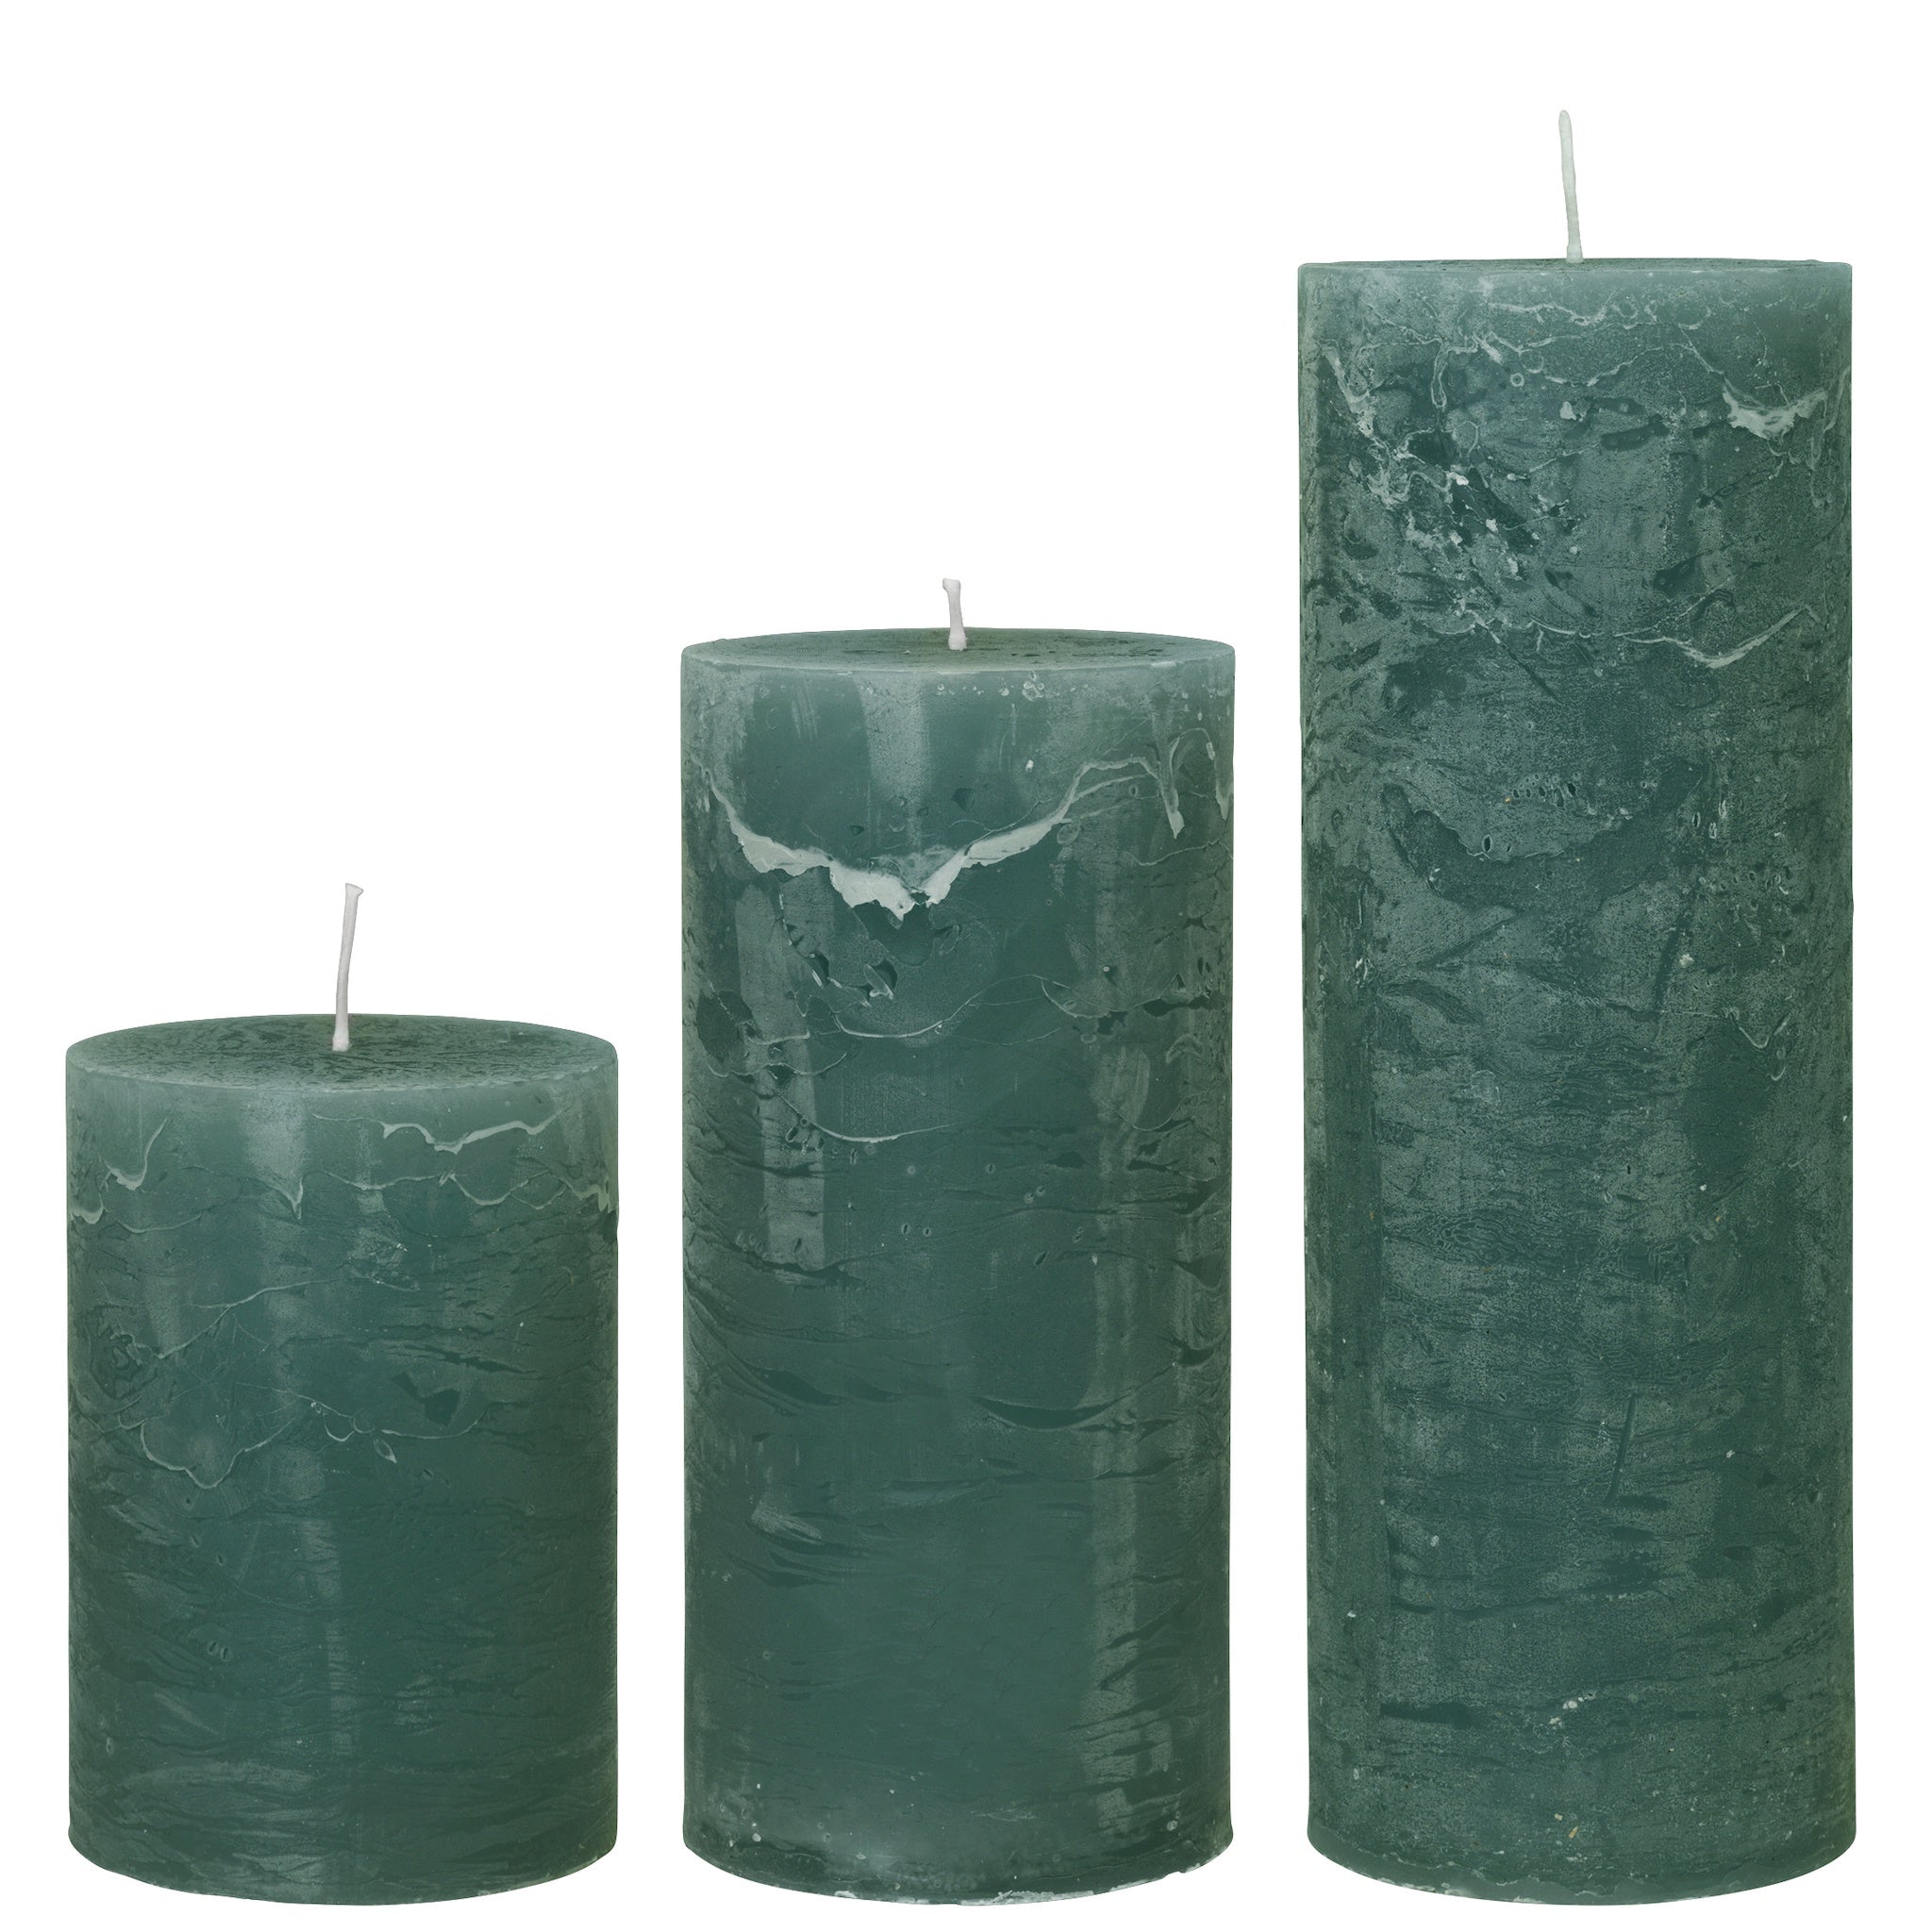 Moss 10x15/25/35cm Statement Rustic Pillar Candle